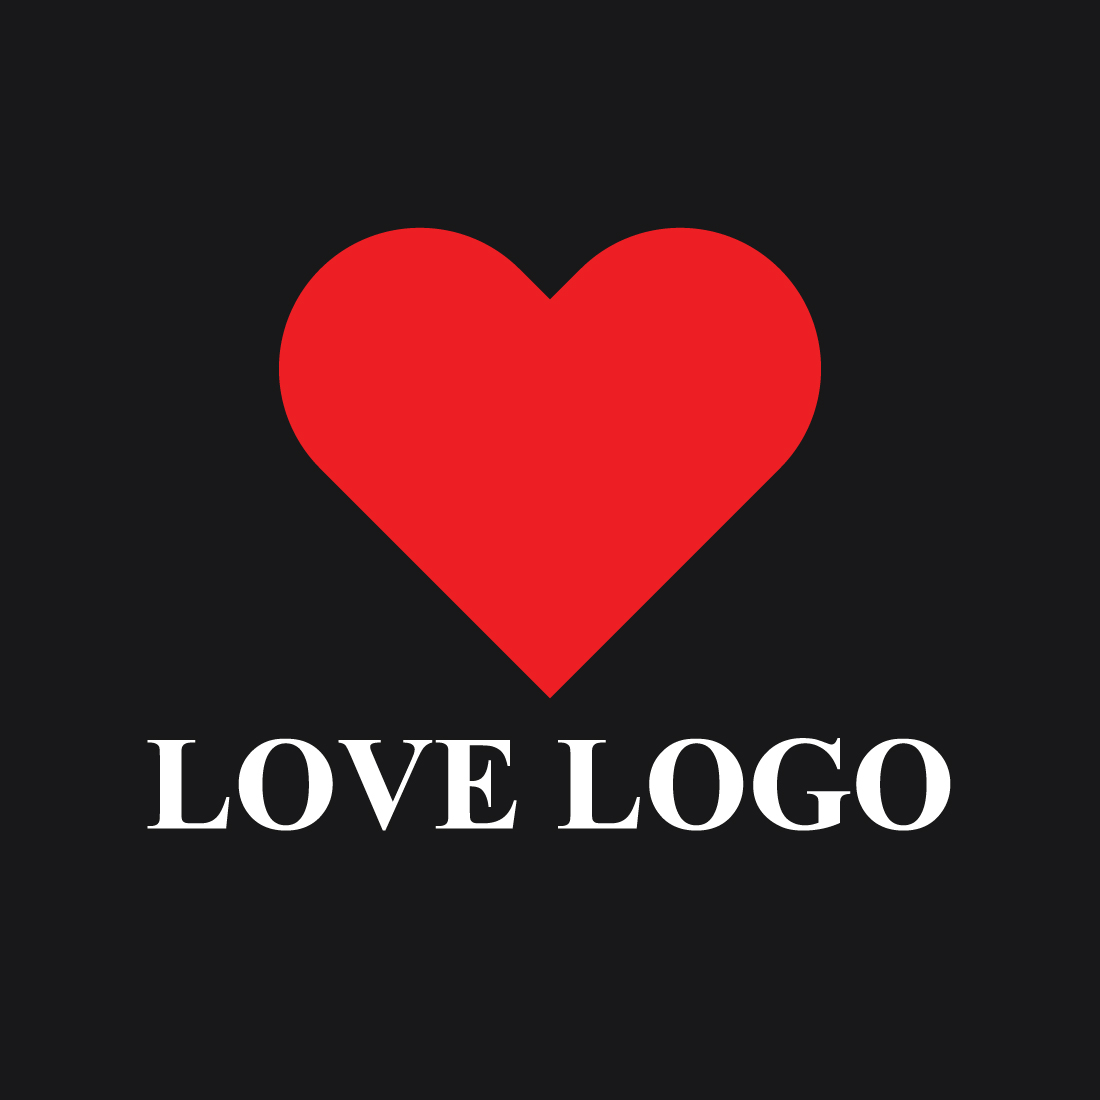 Simple Love Logo Template Design cover image.